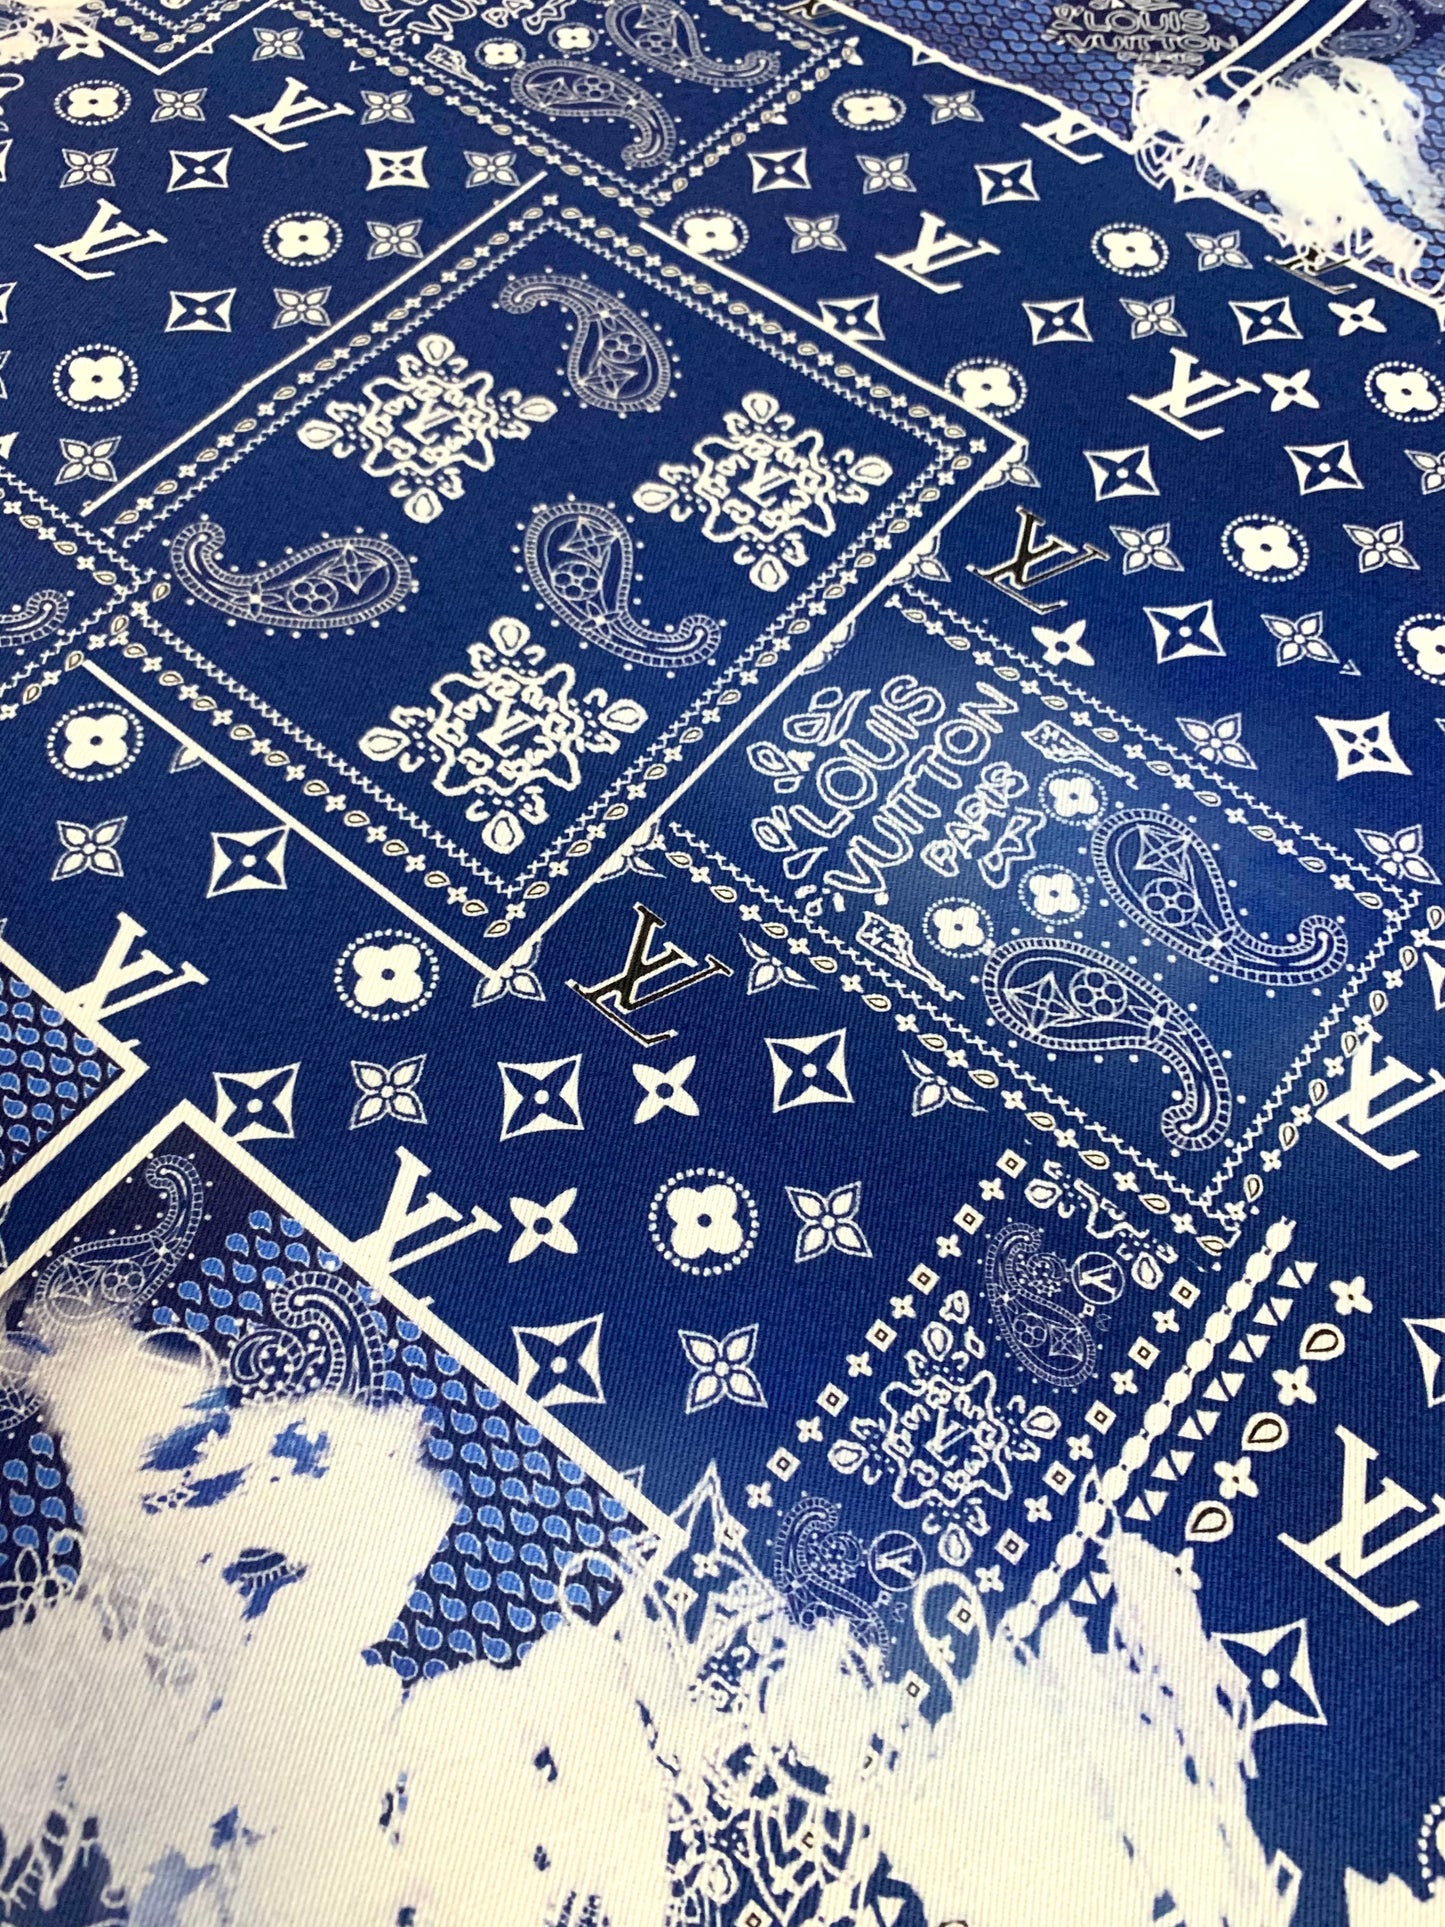 Custom Handmade Blue Print Dye LV Cotton Fabric for Crafting Jacket